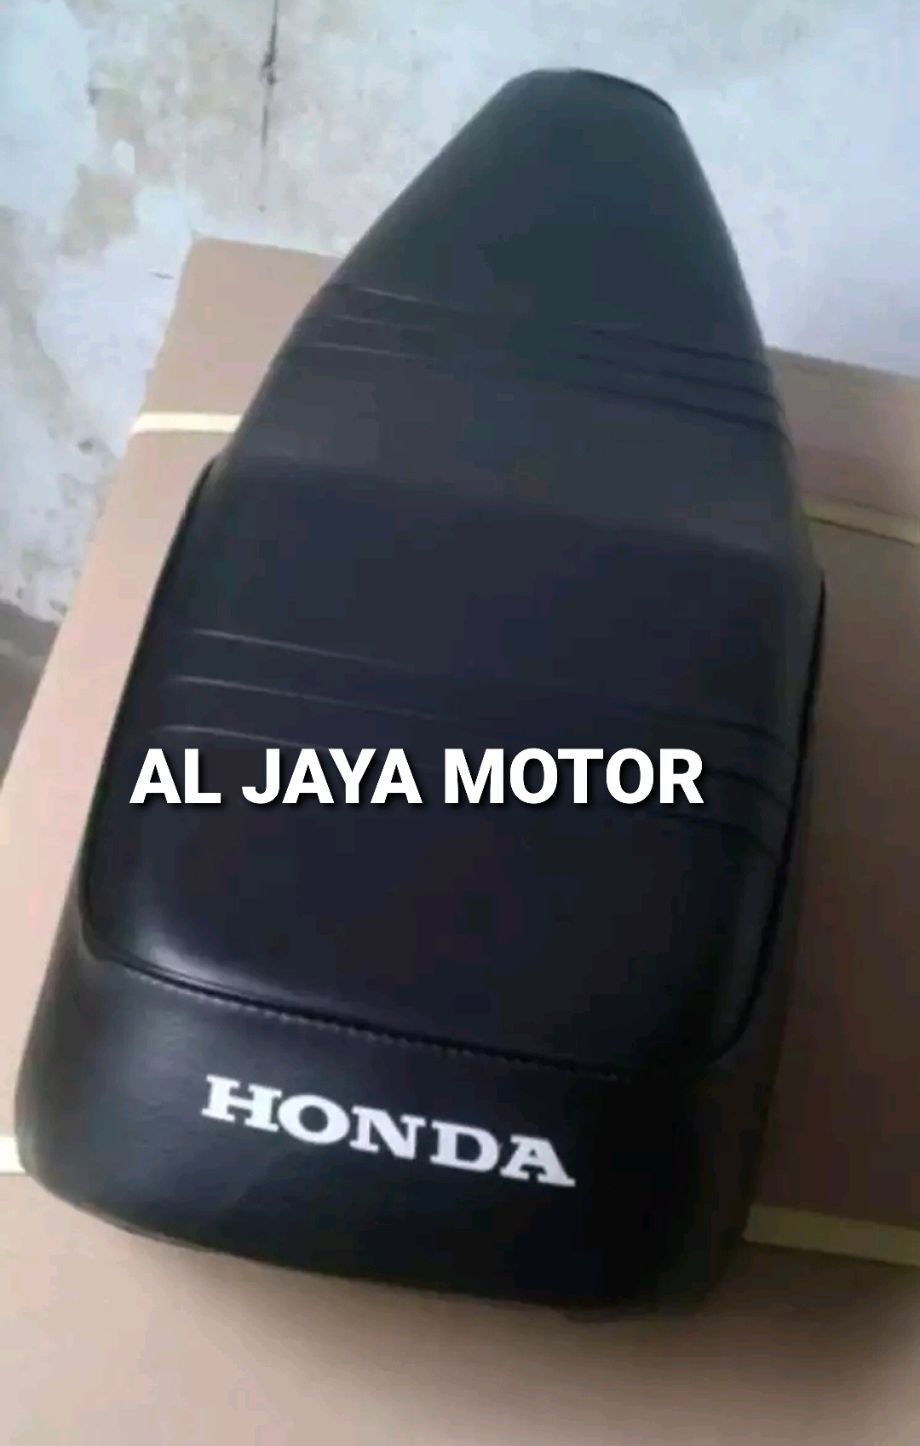 Jual JOK MOTOR HONDA ASTREA GRAND LEGENDA 2 STANDAR TING TING Indonesia Shopee Indonesia